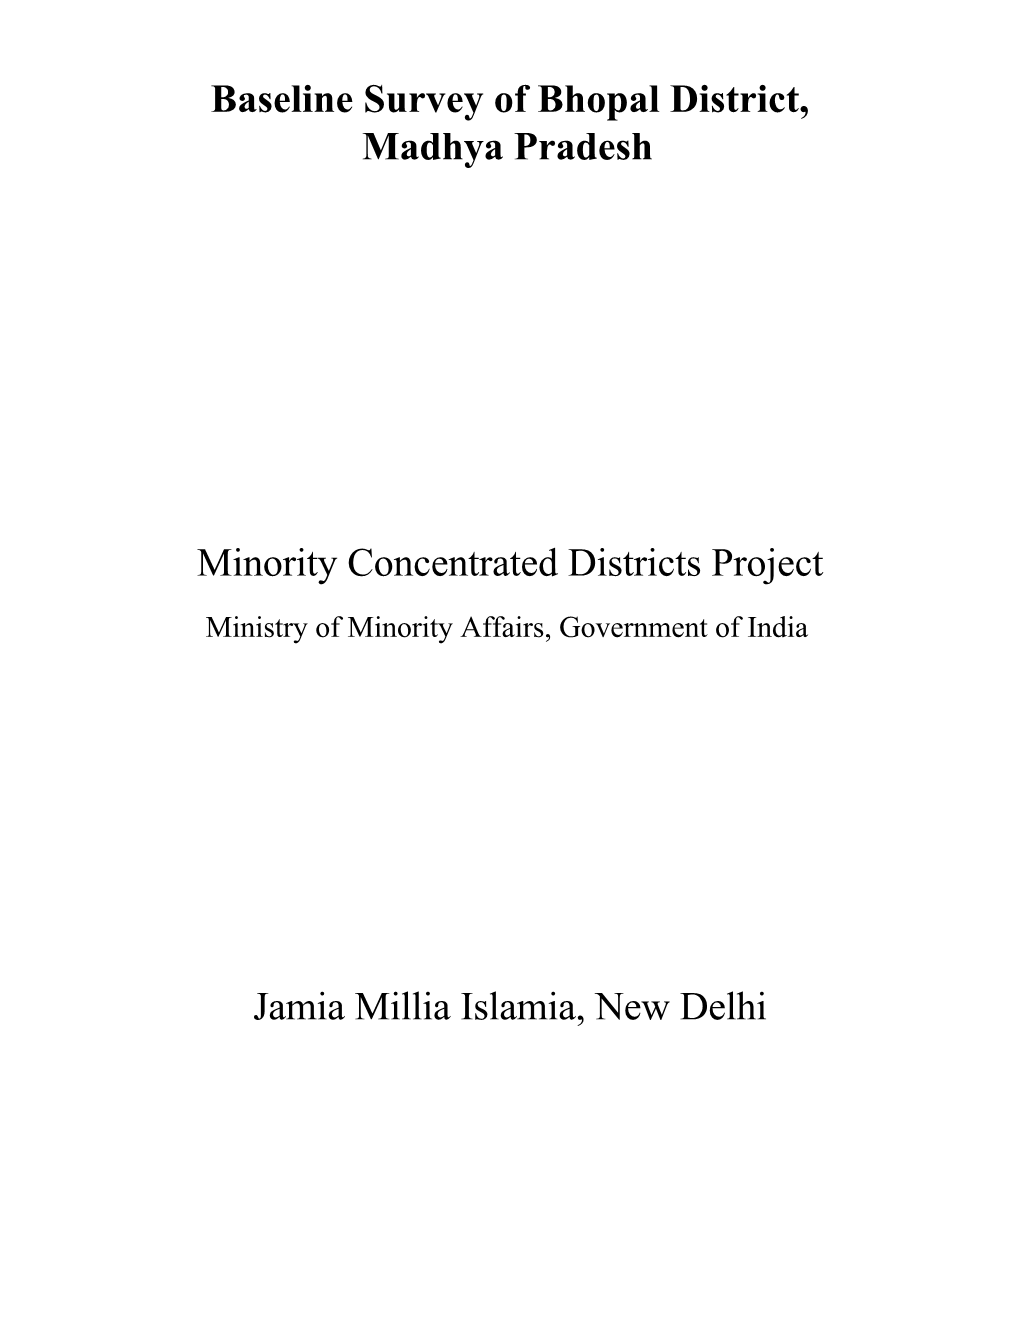 Baseline Survey of Bhopal District, Madhya Pradesh